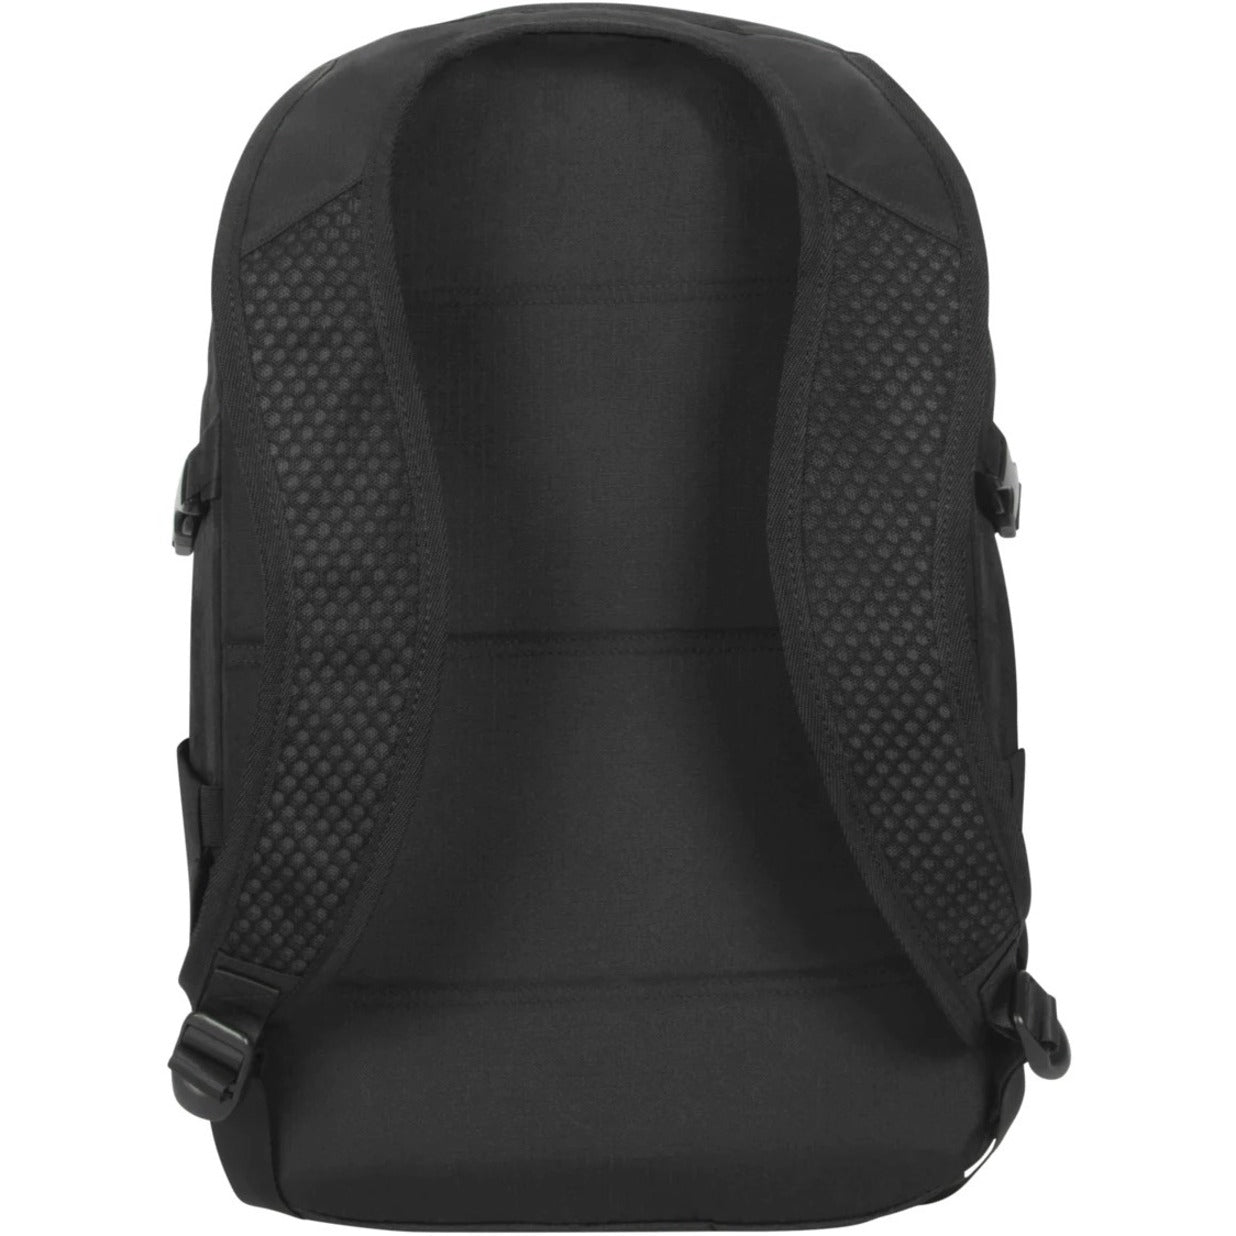 Targus TBB641GL 15.6" EcoSmart Zero Waste Backpack, Black, Lifetime Warranty, Recycled Plastic